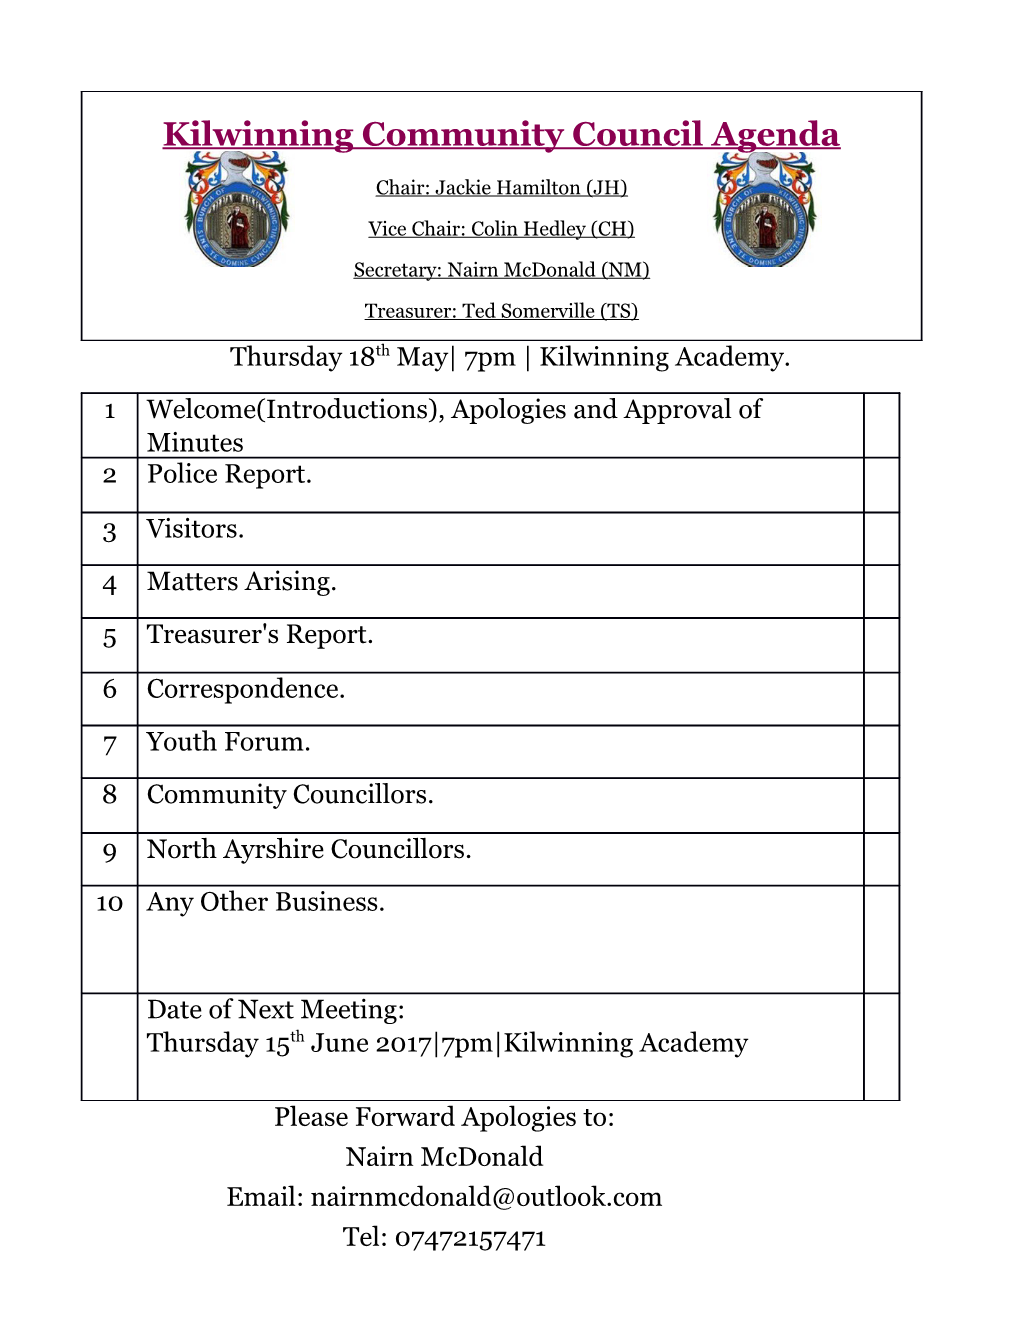 Thursday 18Th May 7Pm Kilwinning Academy